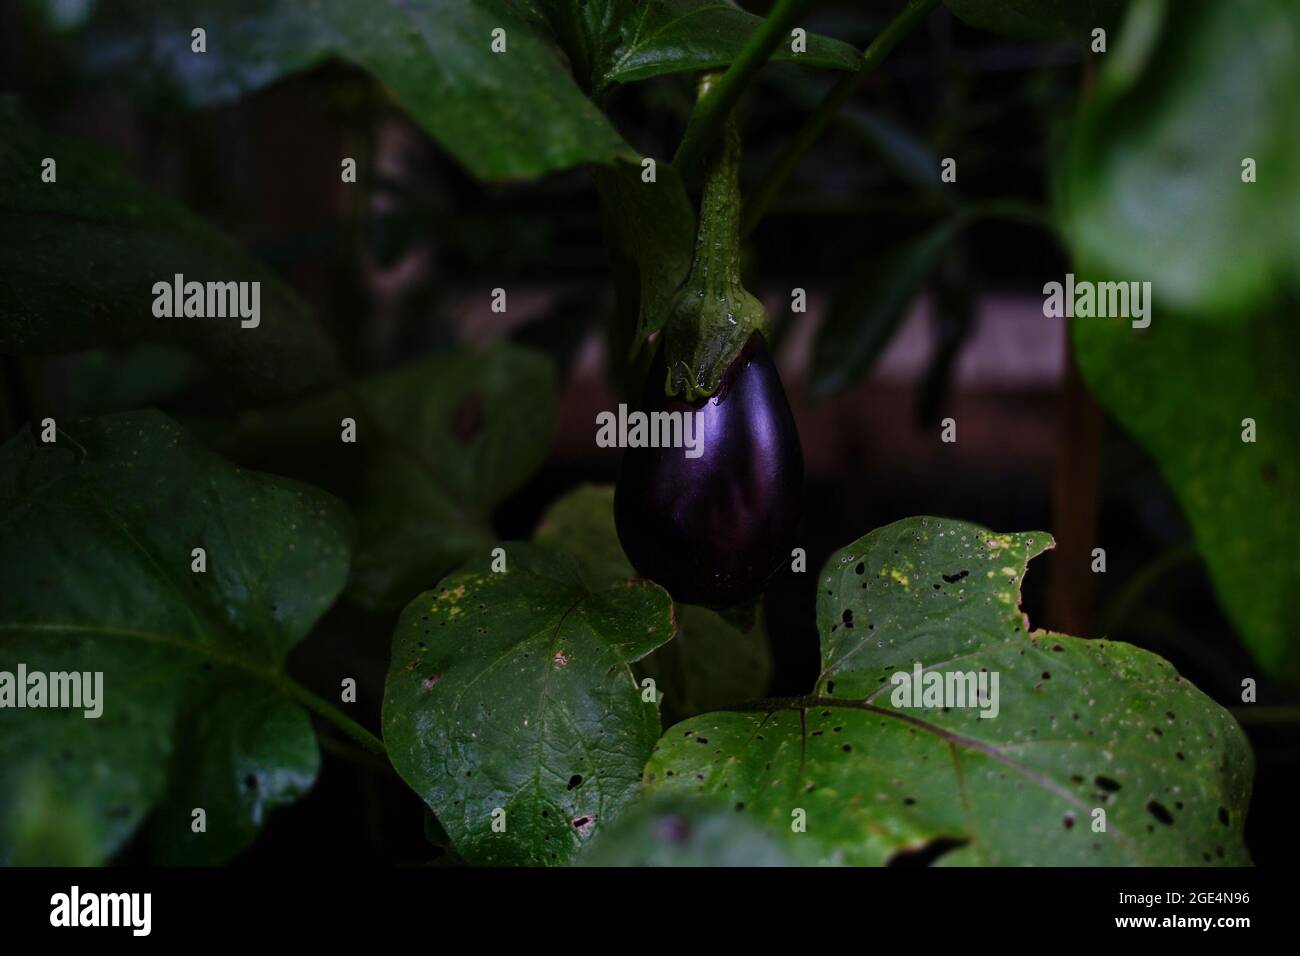 Purple Indian eggplant growing in backyard garden, selective focus Stock Photo